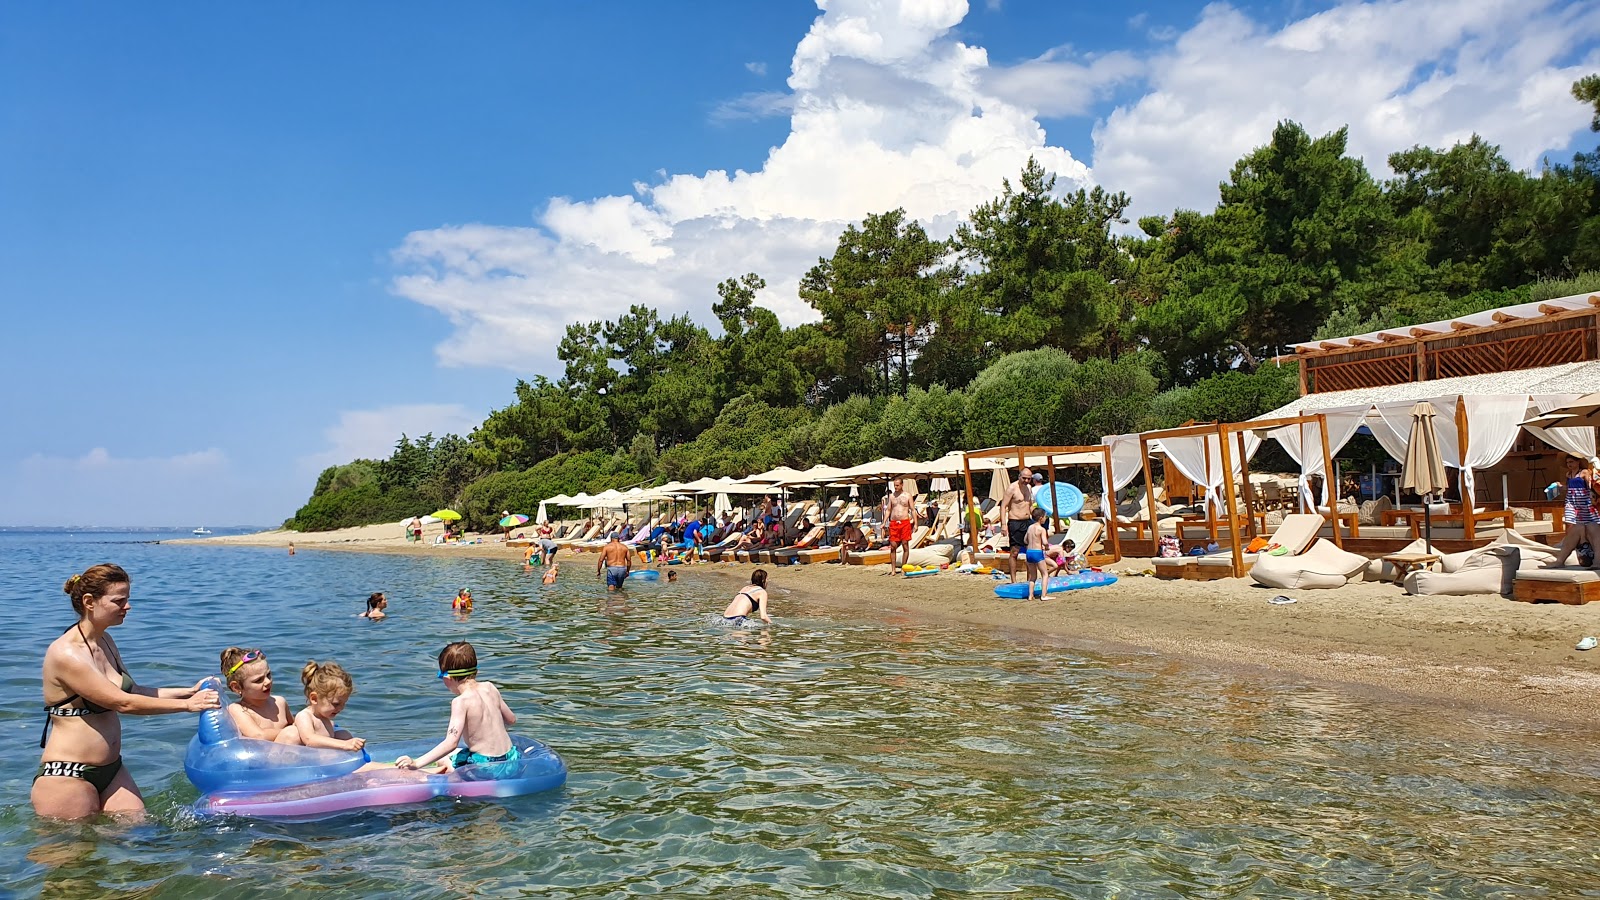 Foto de Gerakini beach II - lugar popular entre os apreciadores de relaxamento